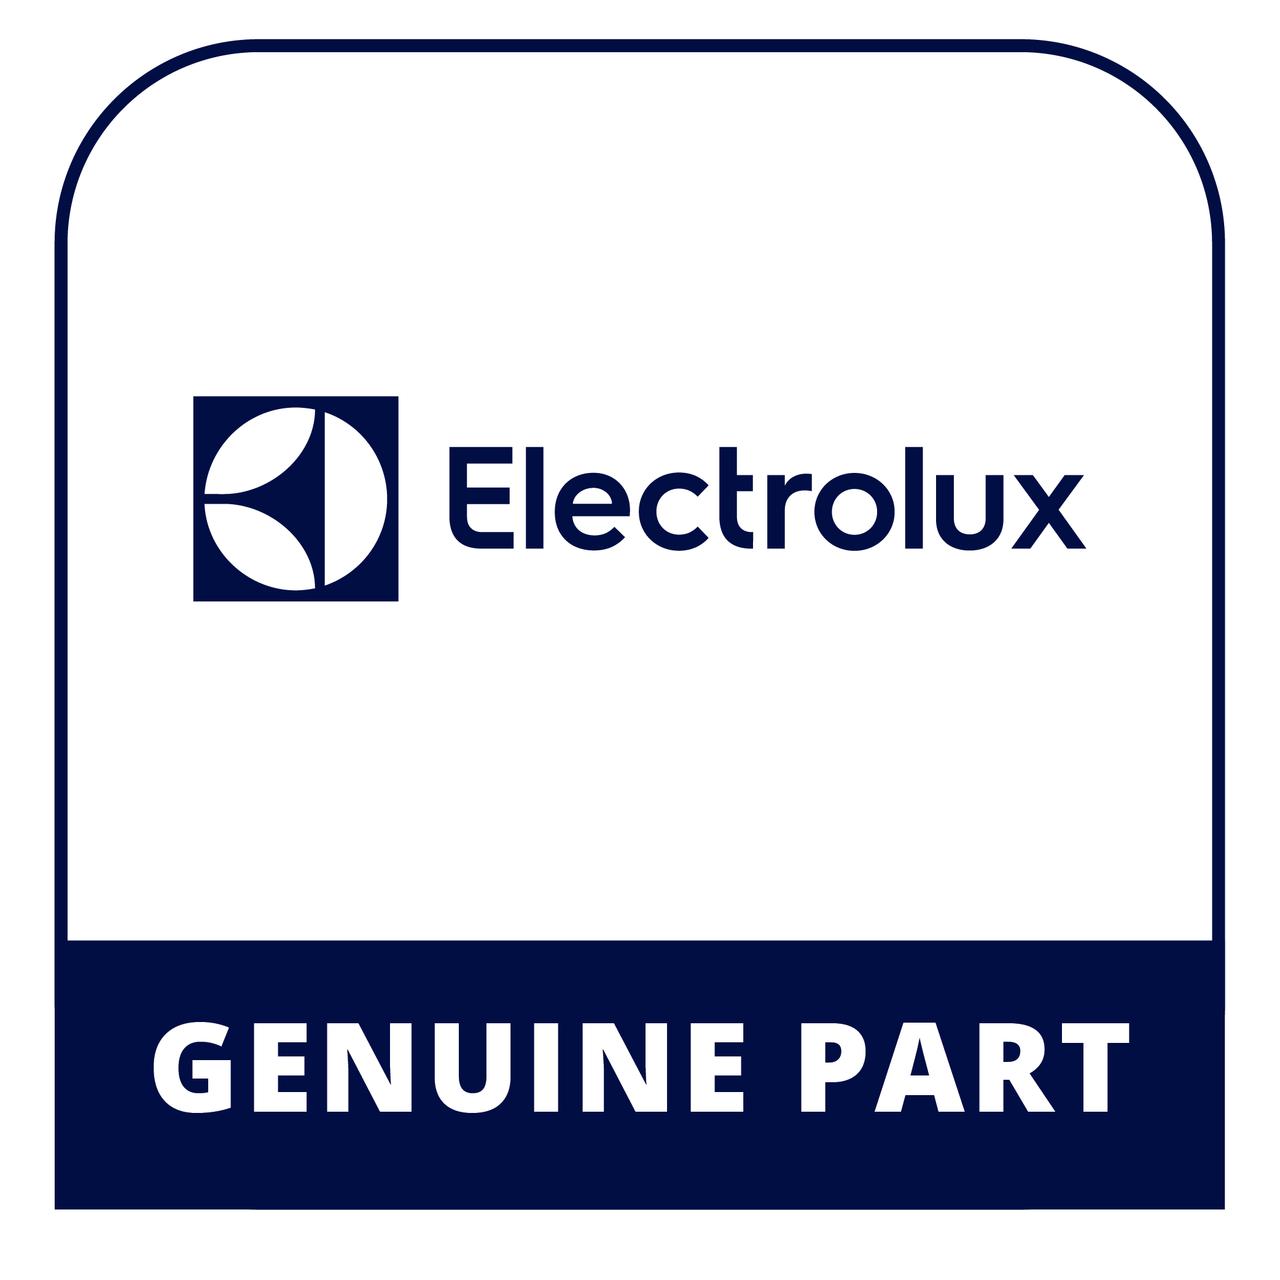 Frigidaire - Electrolux 5304482883 - Capacitor - Genuine Electrolux Part